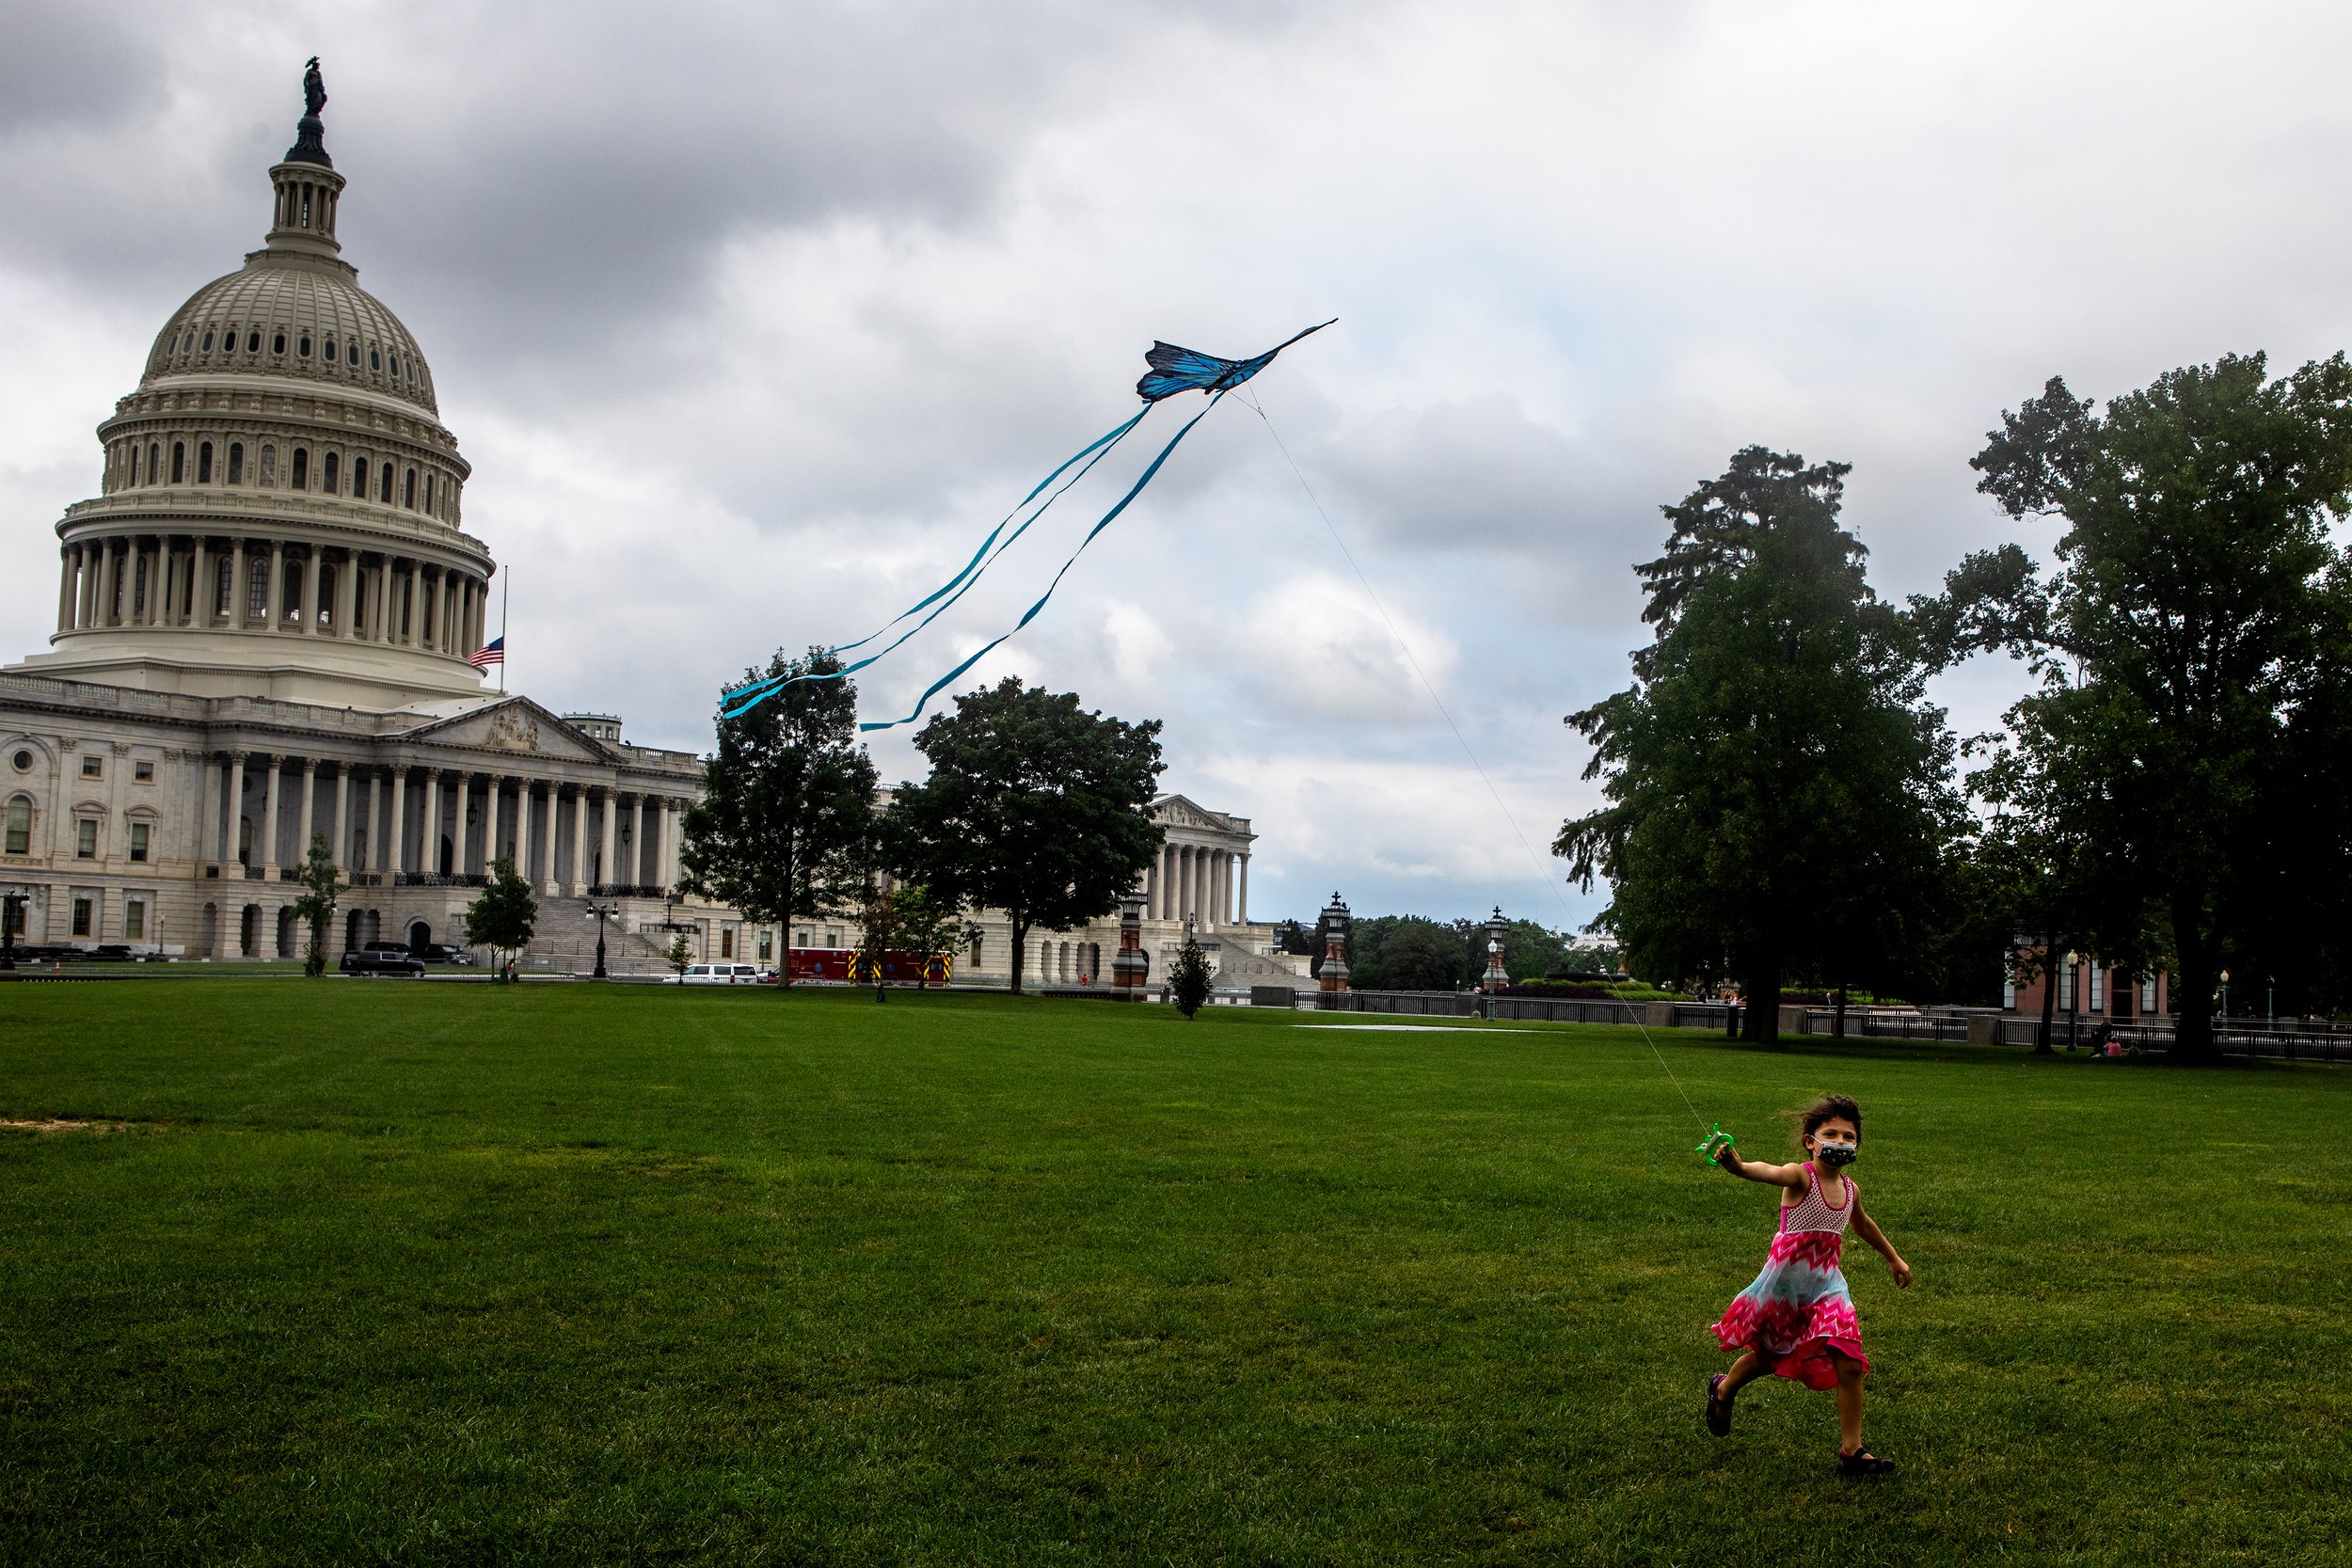  Celeste Miller 5, flying a kite outside of The US Capitol in Washington D.C. 